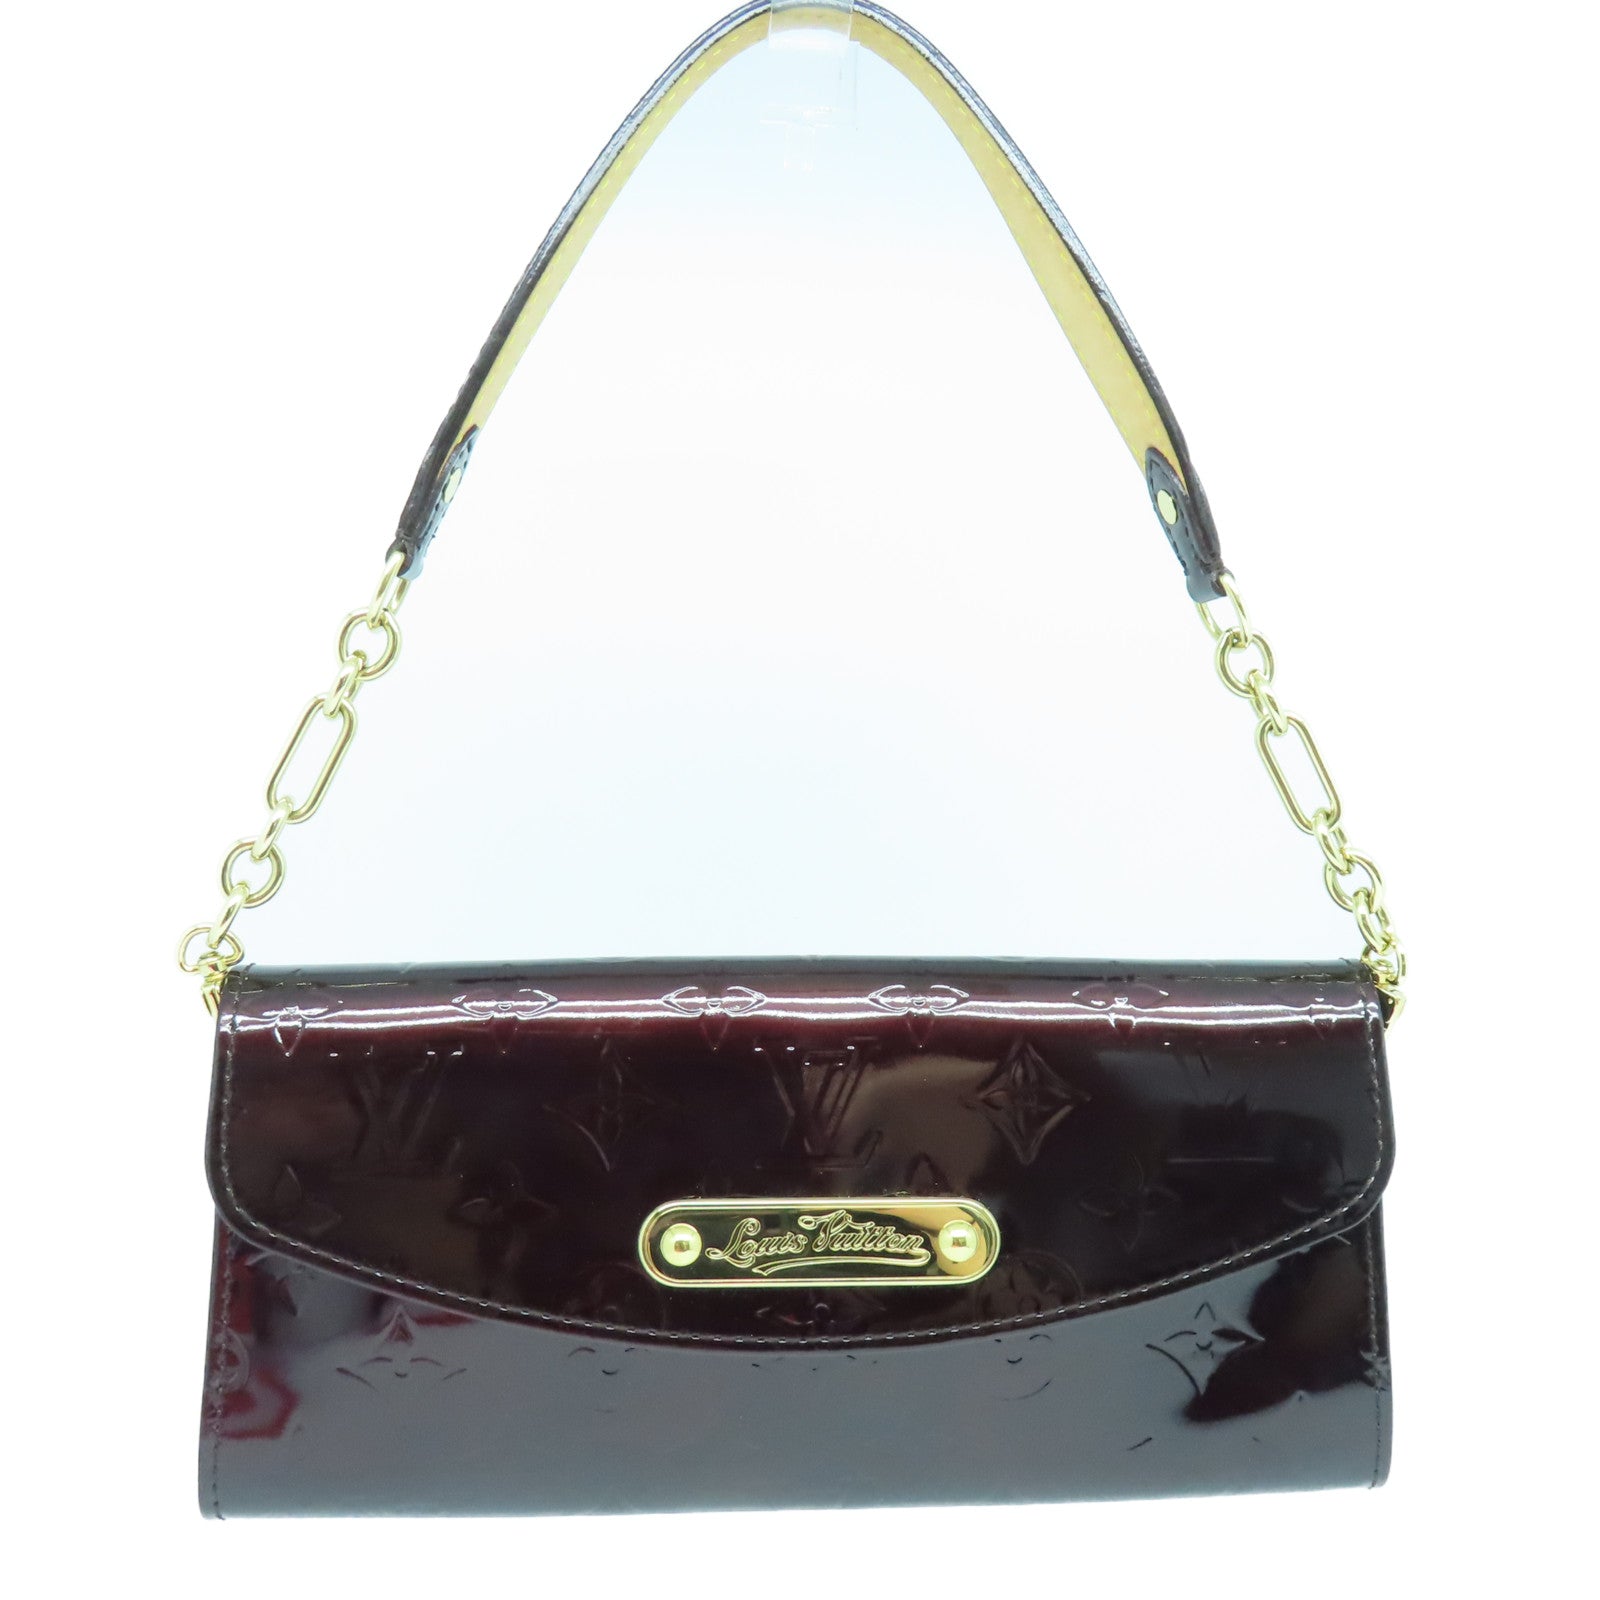 Louis Vuitton Sunset Boulevard handbag in burgundy monogram patent